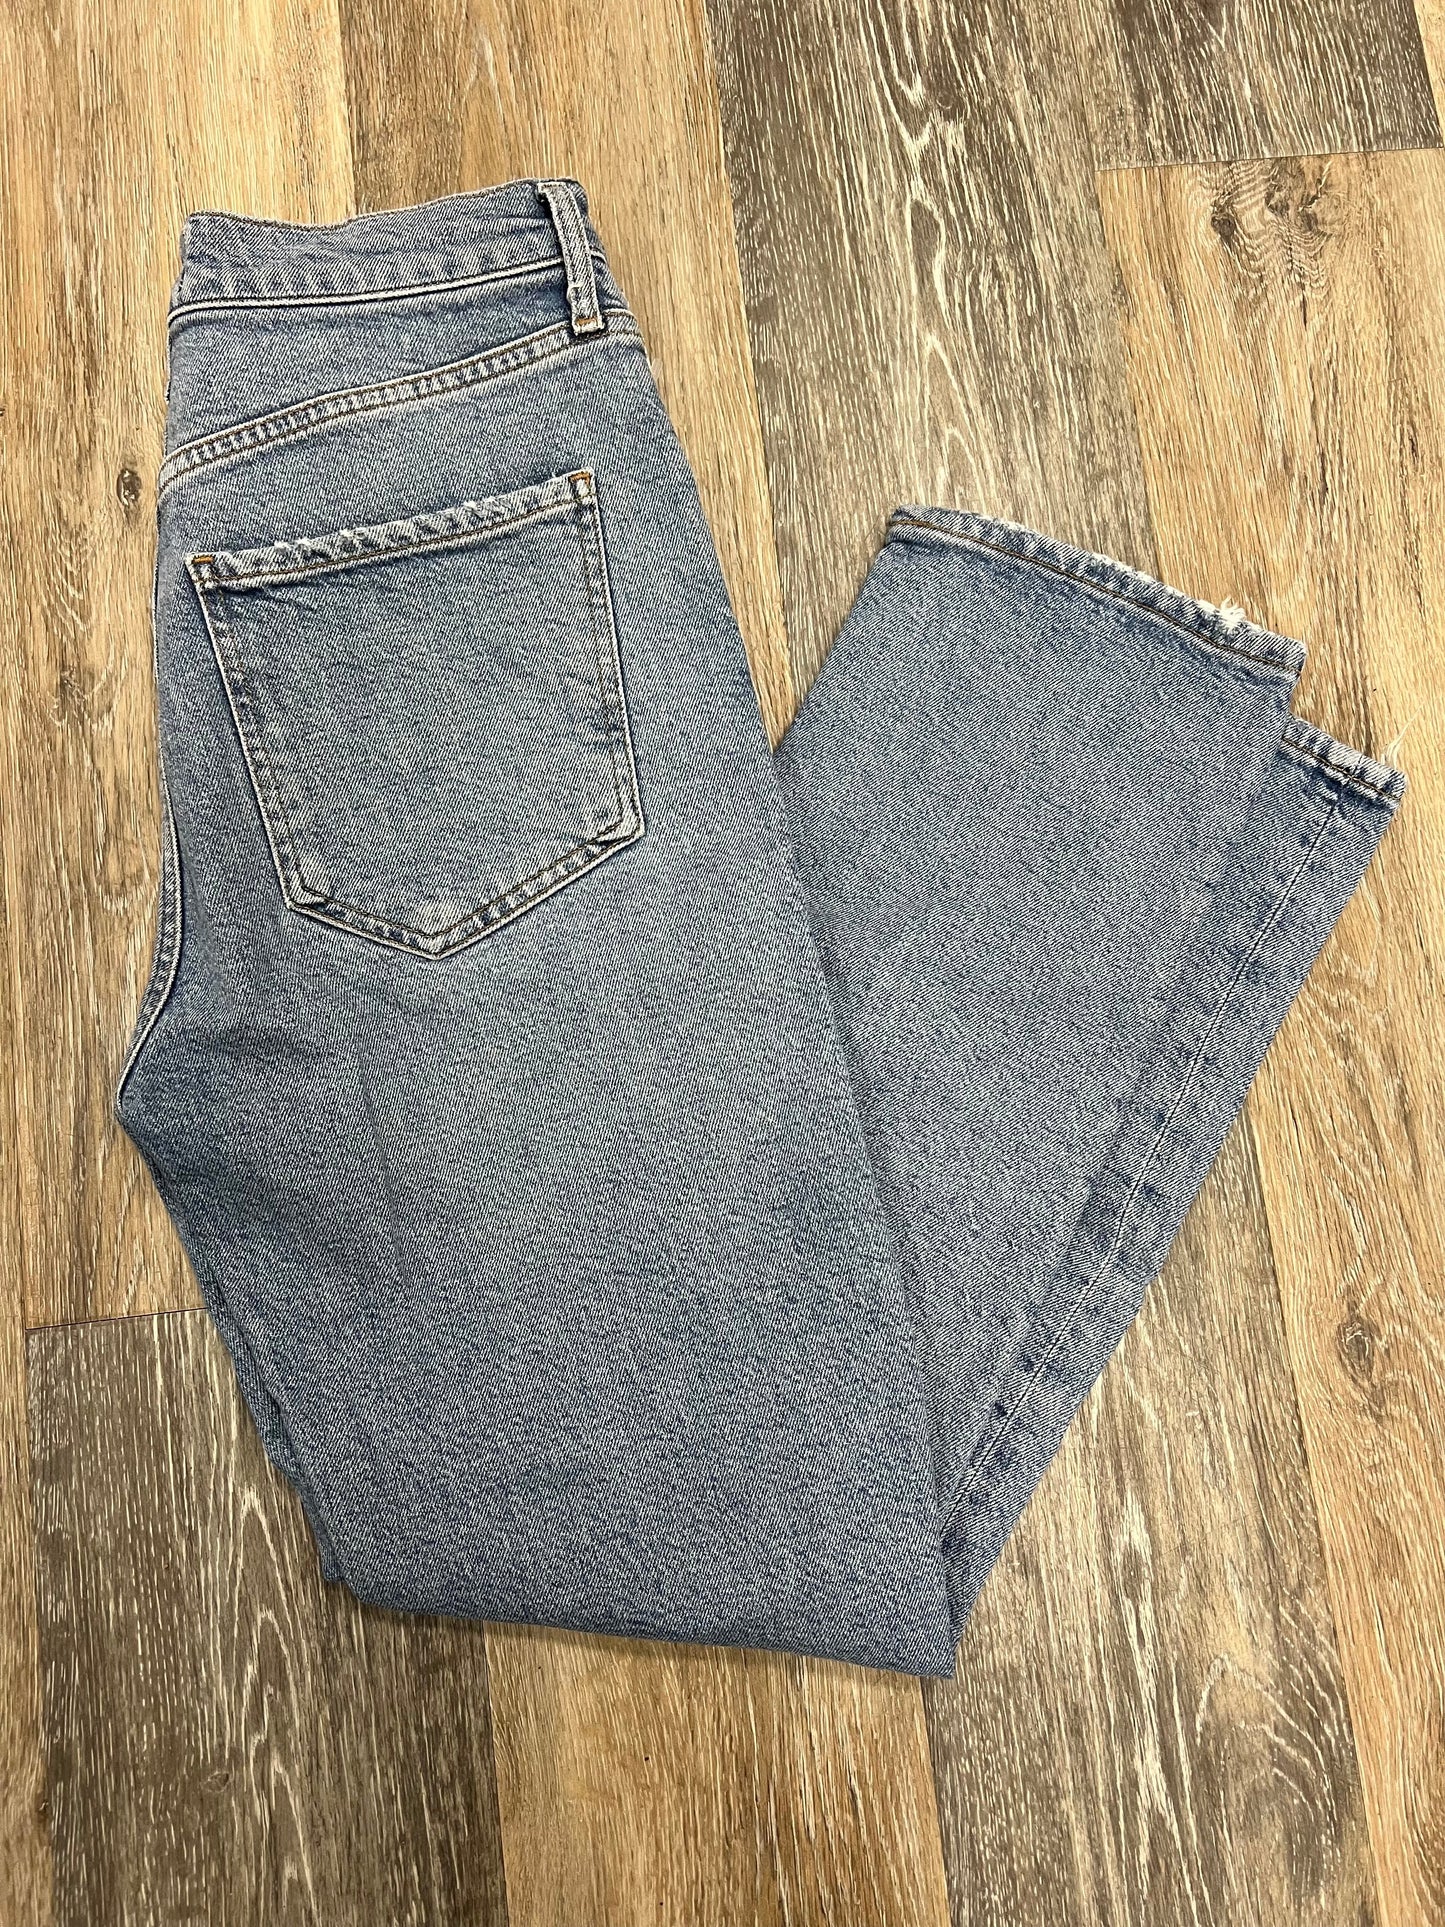 Jeans Designer By Agolde  Size: 2/26